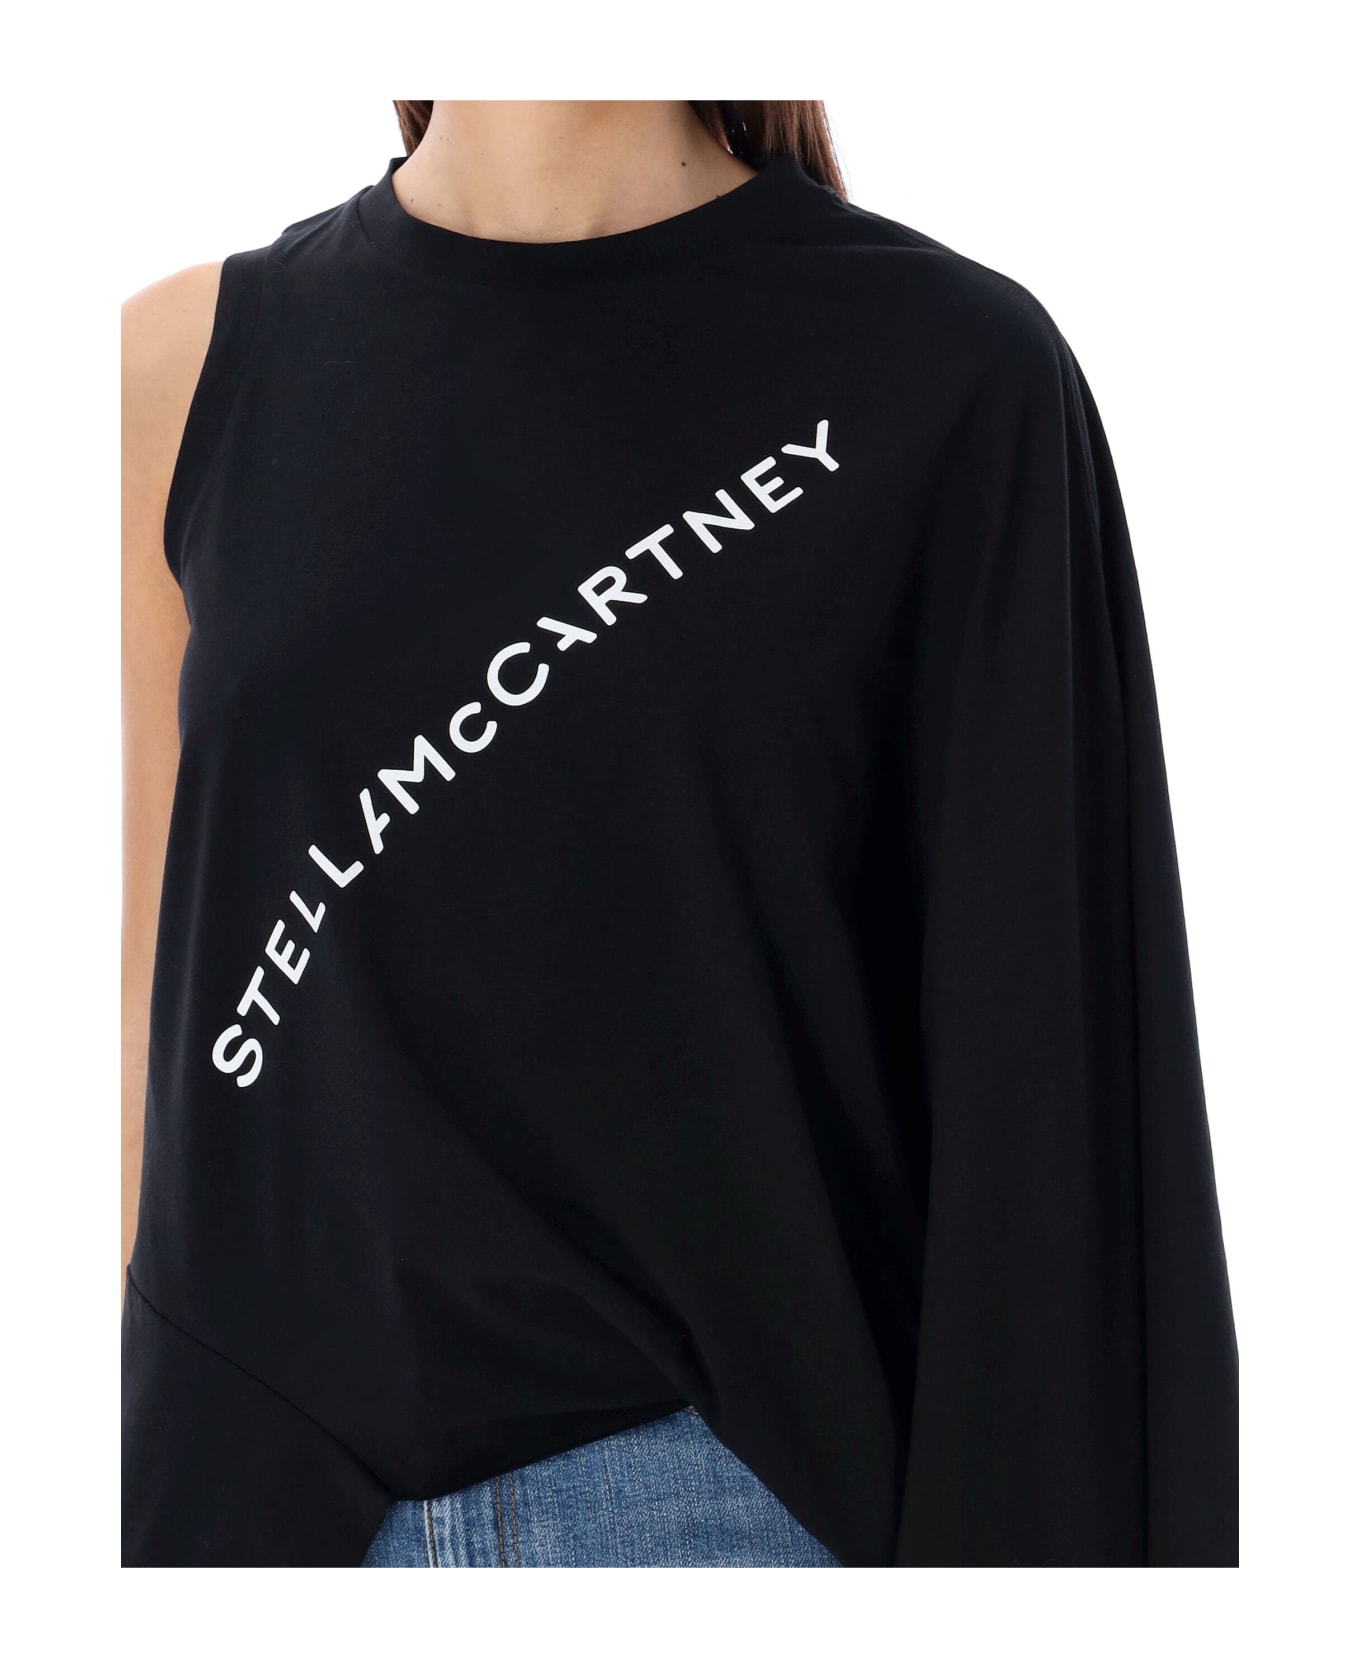 Stella McCartney Fluid Logo One Sleeve Top - Black